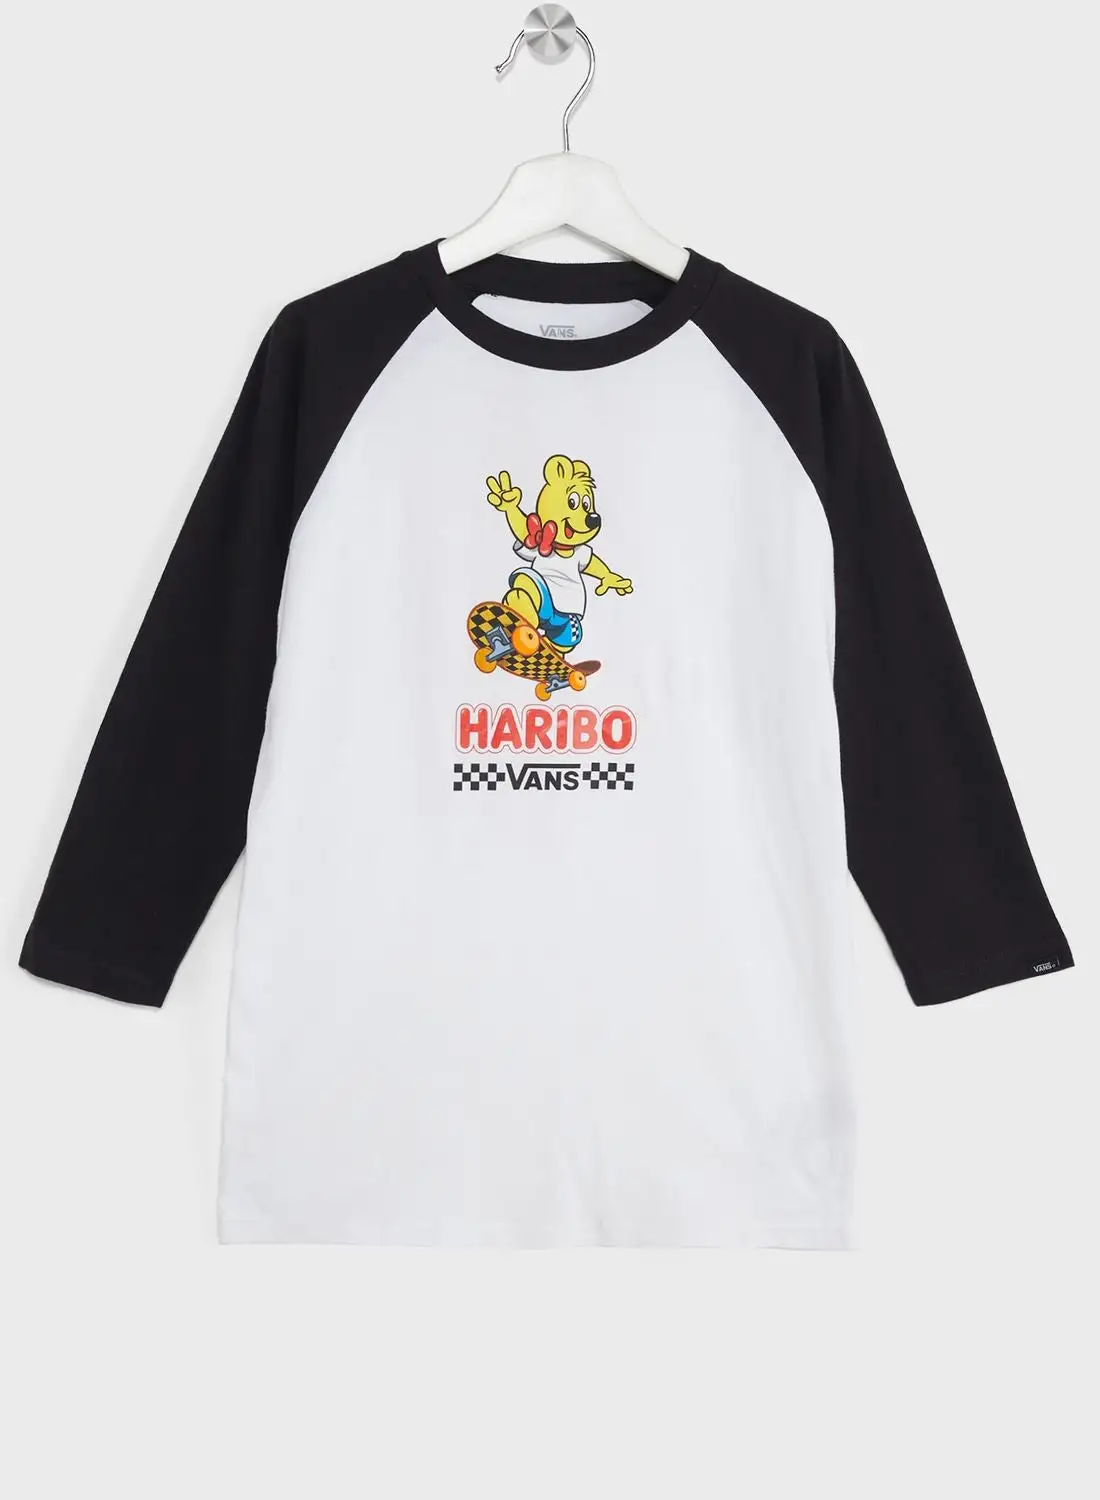 VANS Youth Haribo Raglan T-Shirt